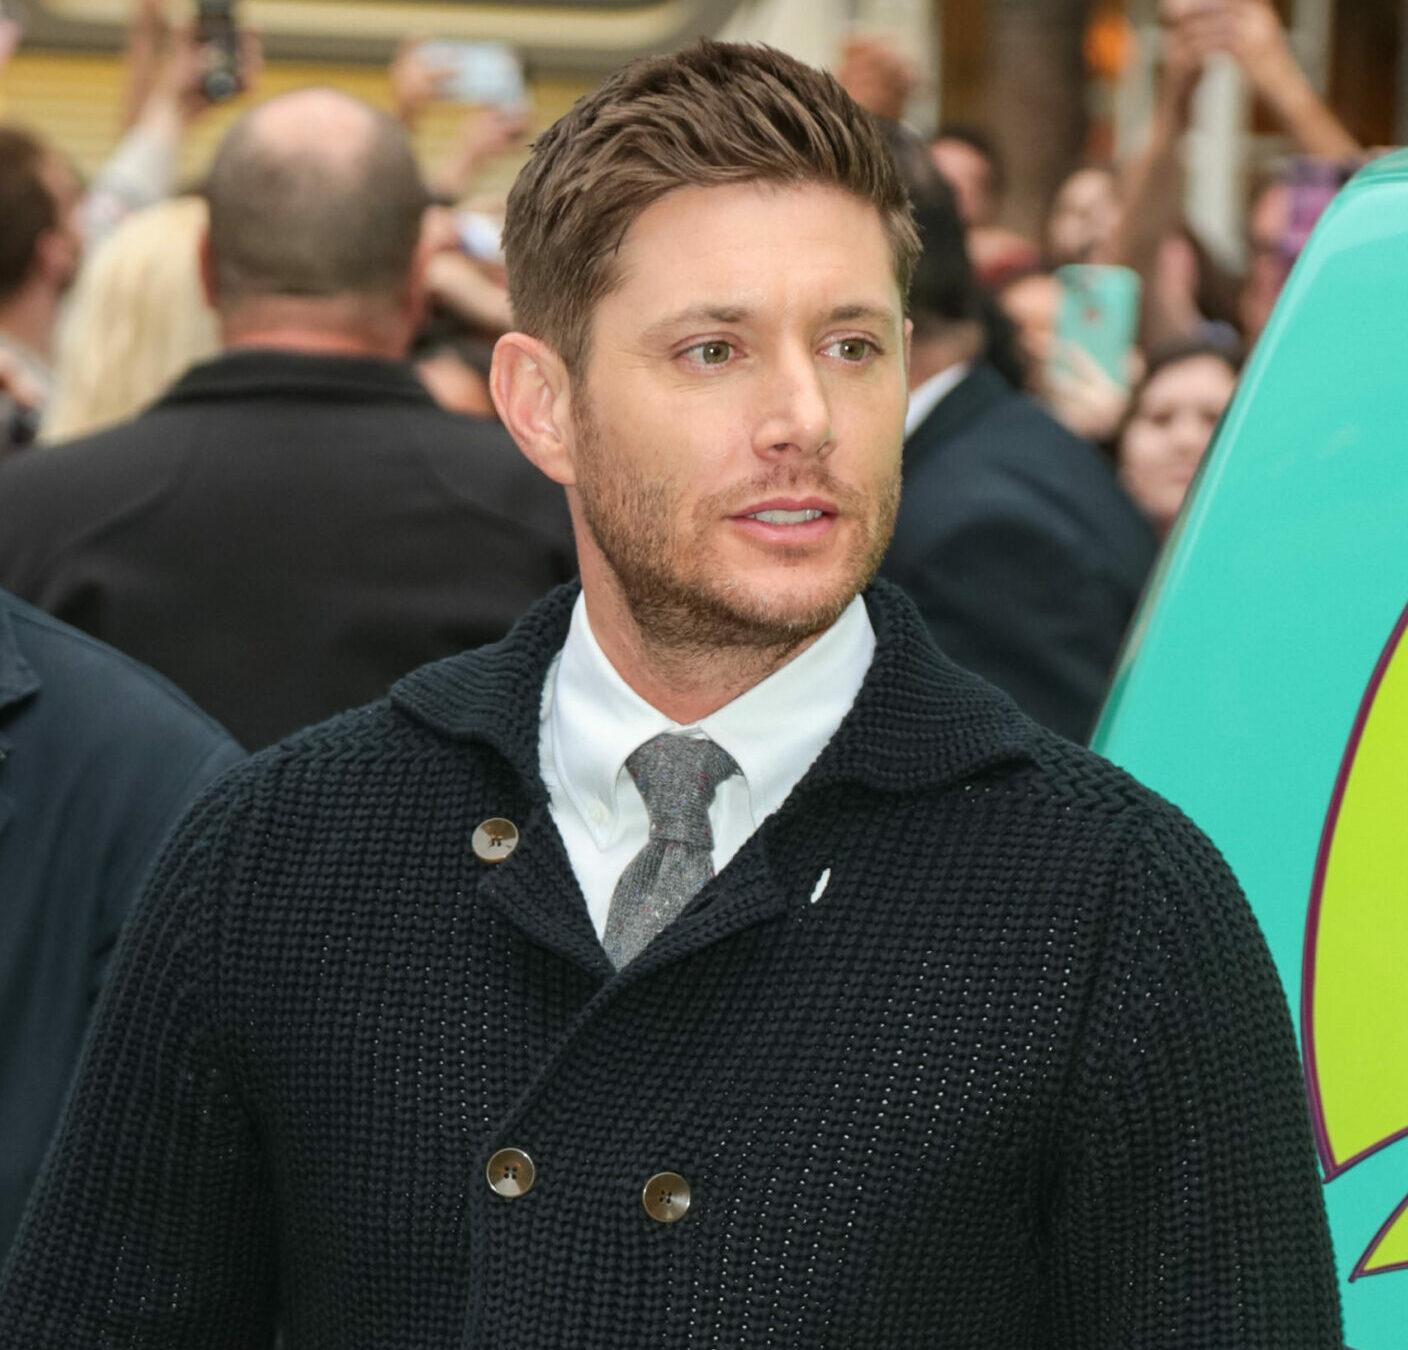 Jensen Ackles at 2018 PaleyFest Los Angeles - CW's "Supernatural"